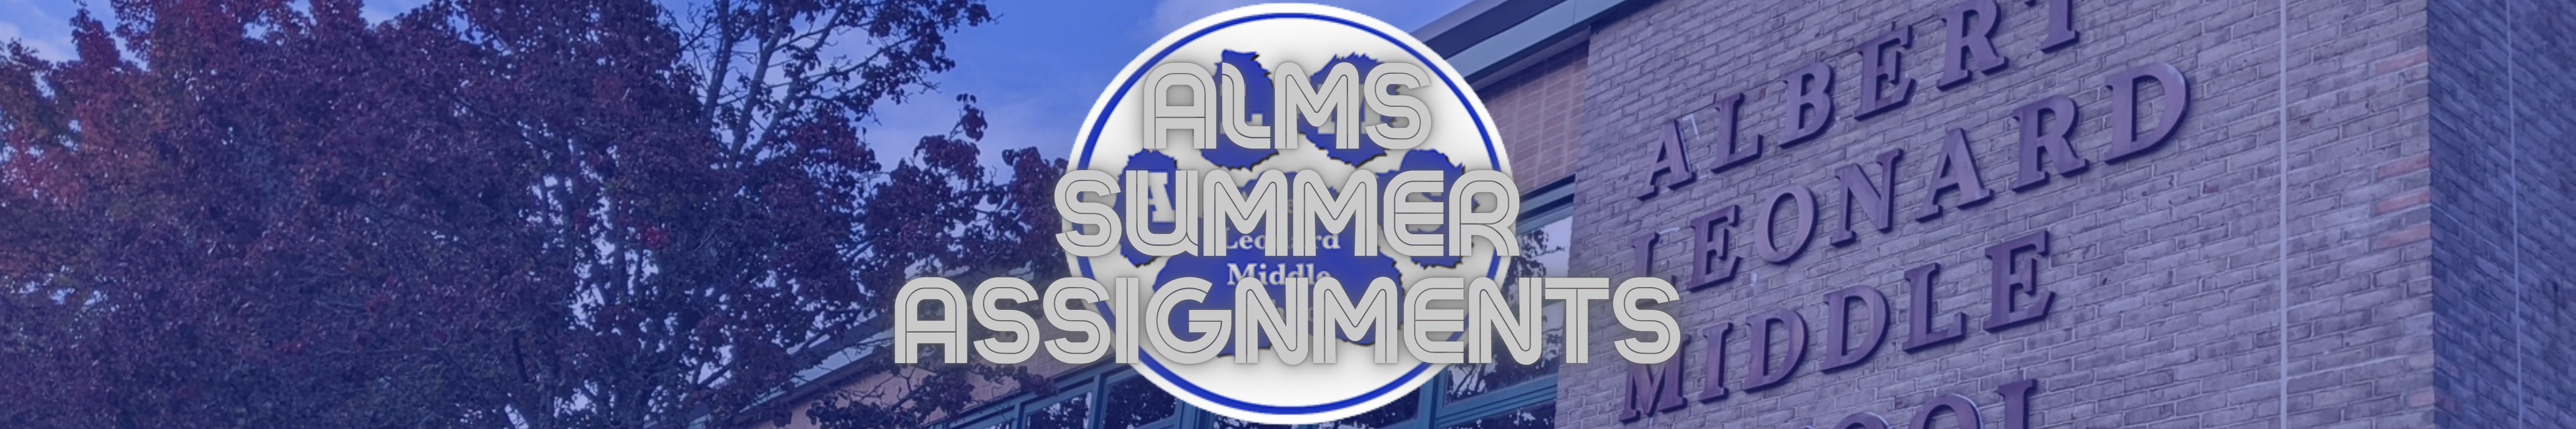 ALMS Summer Assignments banner